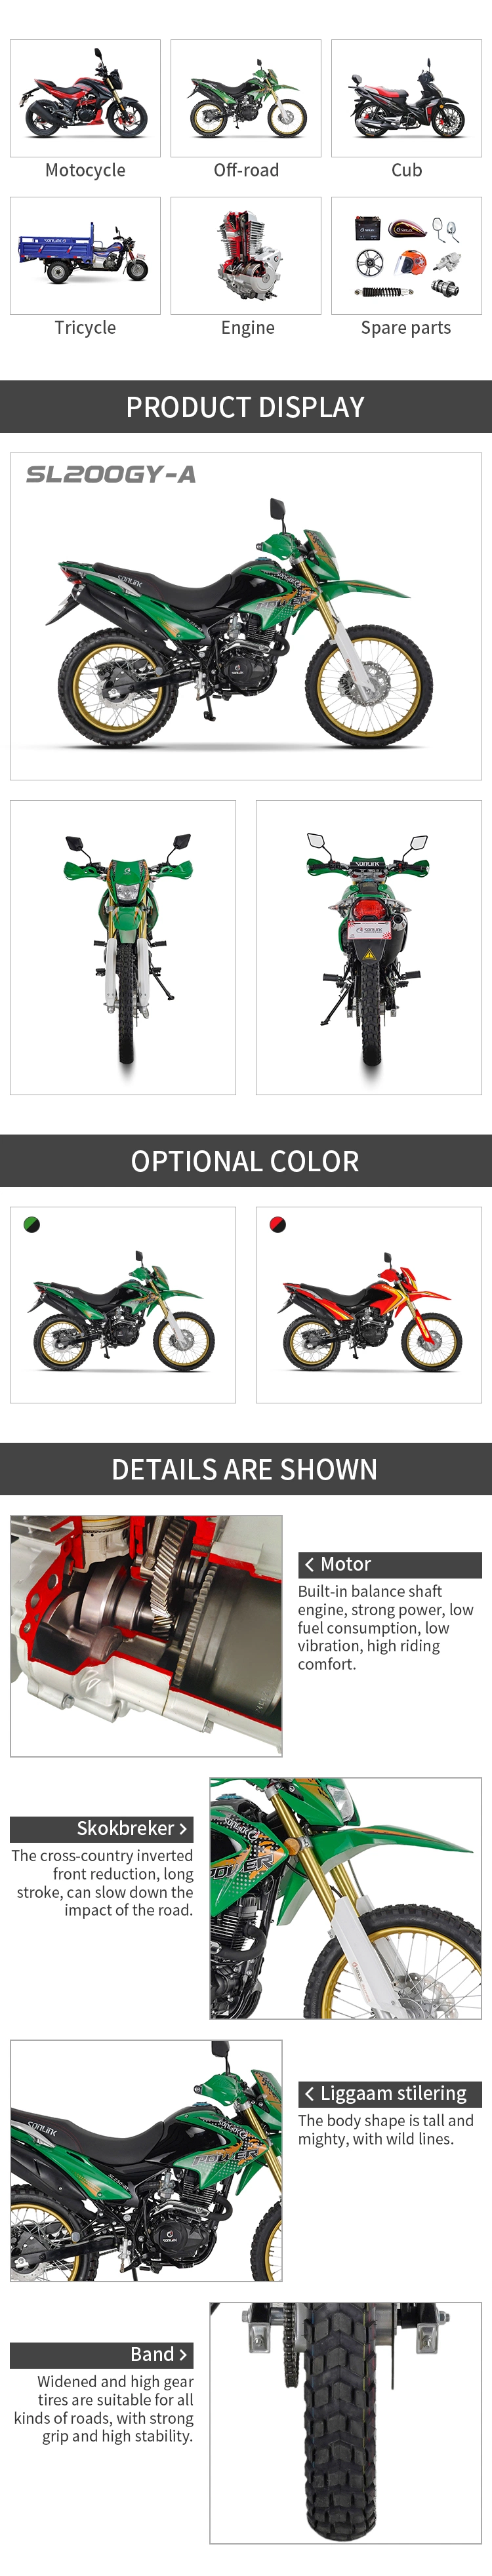 Sonlink Custom Powerful Stylish Design Good Performance Motocross Bike 200cc 4-Stroke off-Road Enduro Dirt Bike Motorcycle